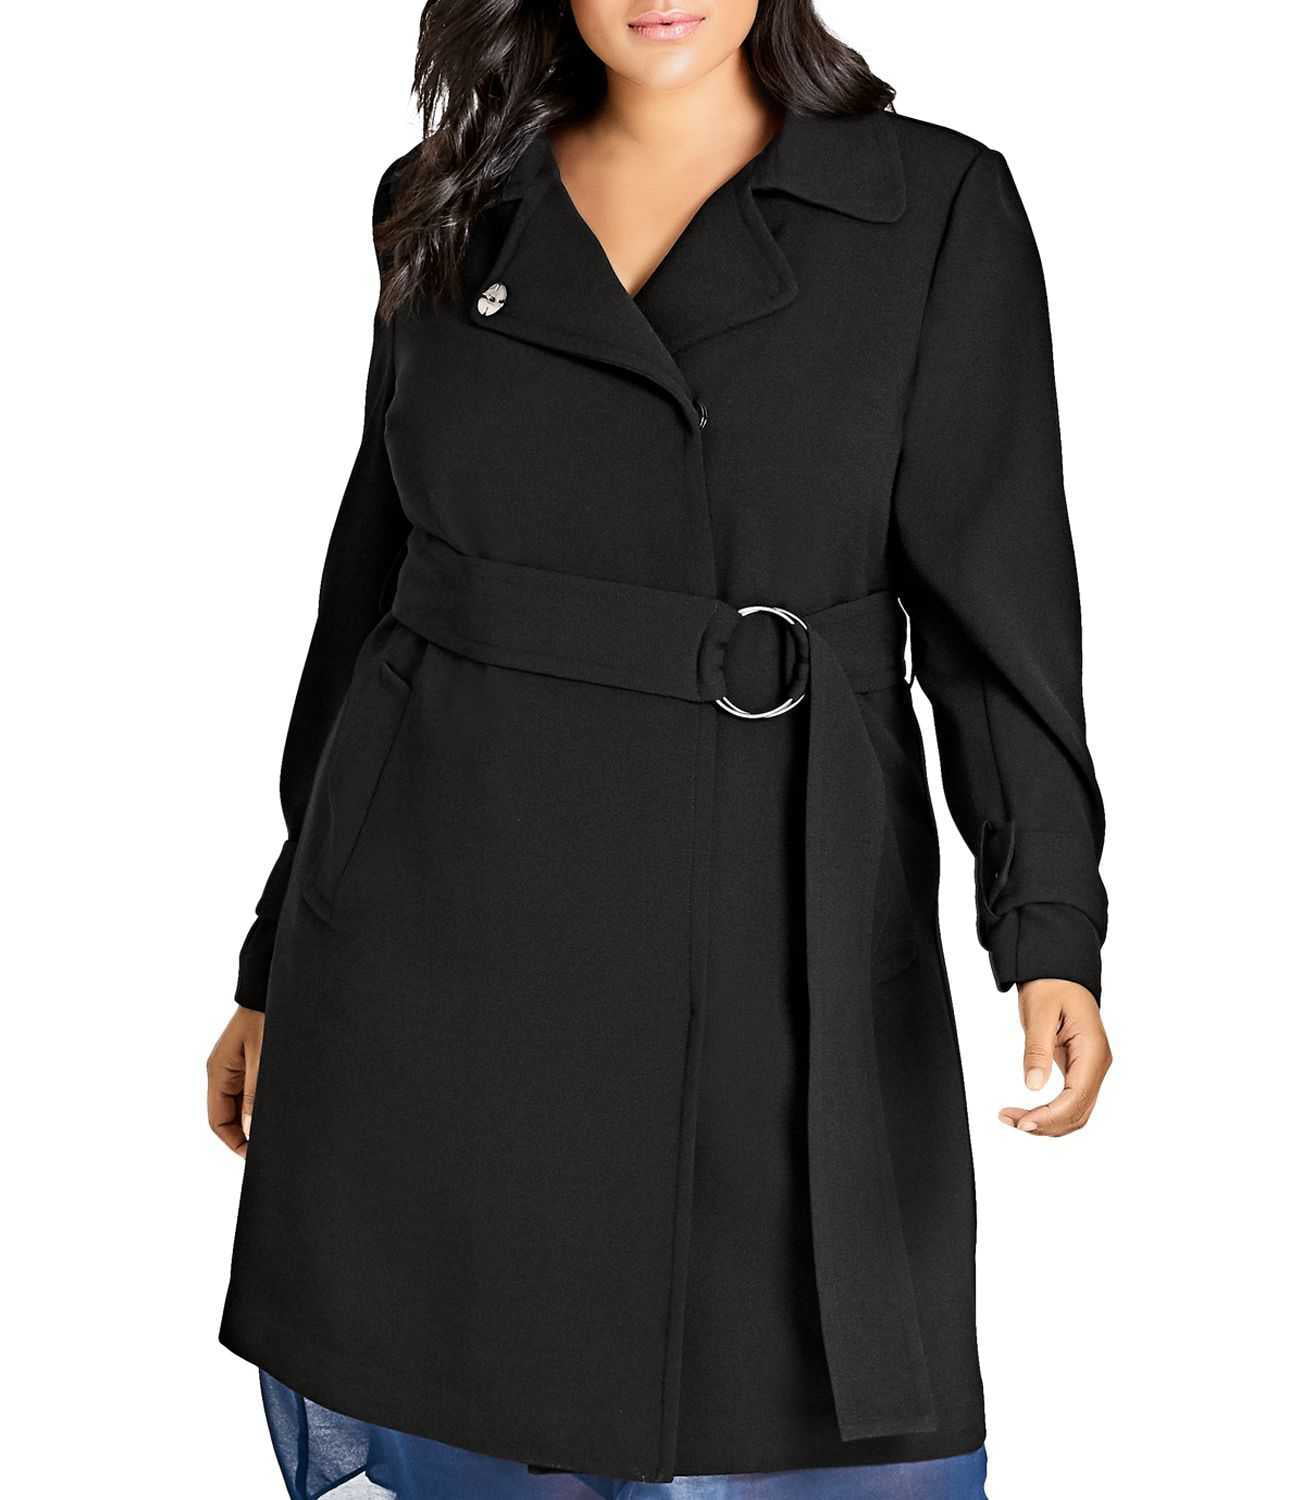 City Chic Size Trendy Wrap Coat (Black, XS/14)